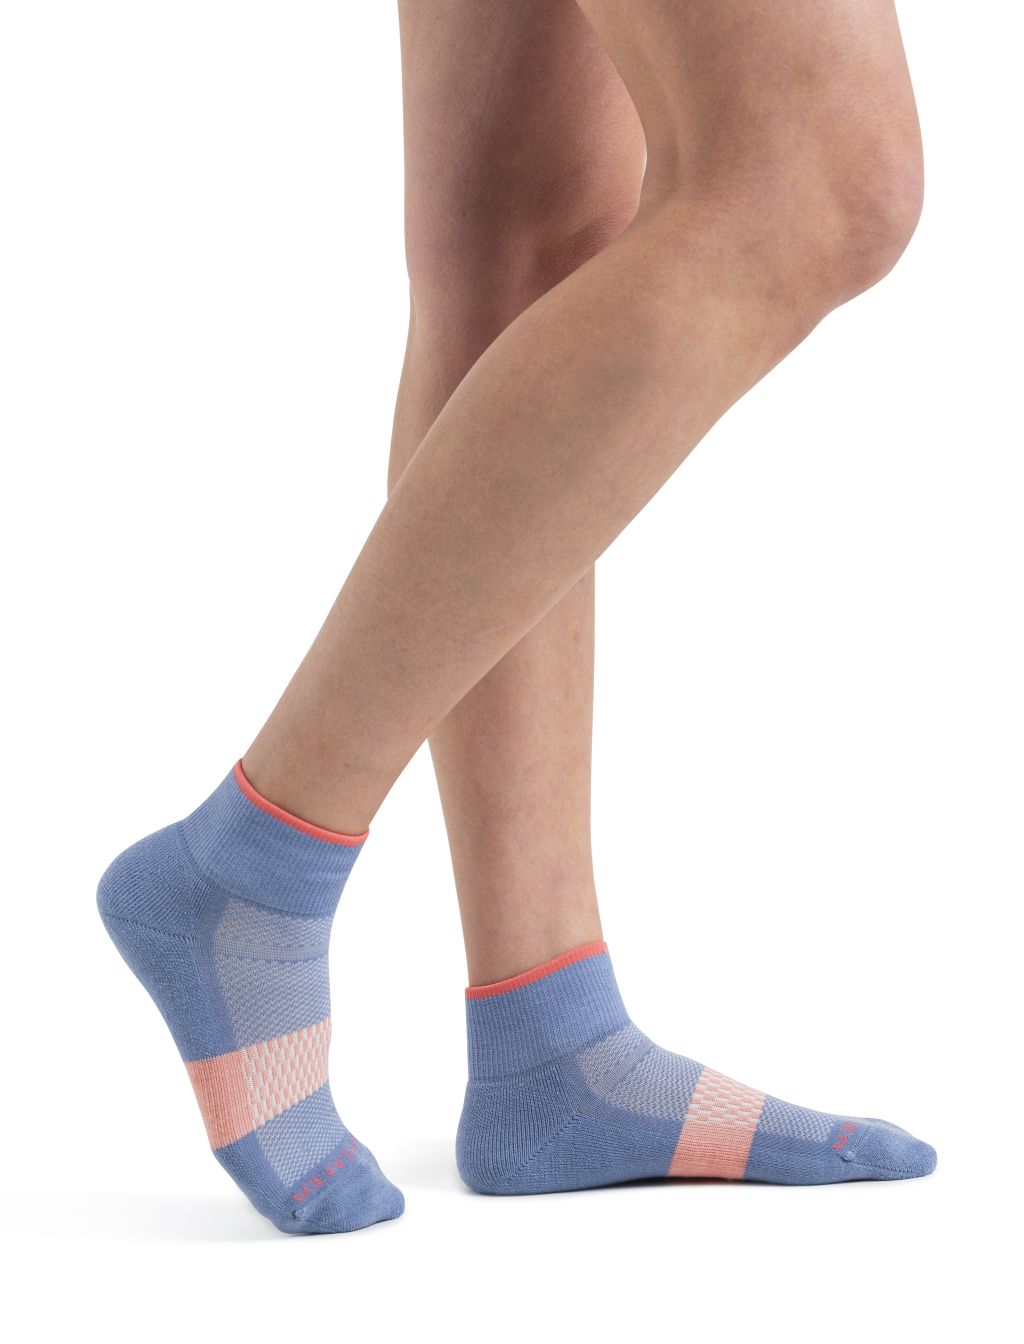 Dámské merino ponožky ICEBREAKER Wmns Multisport Light Mini, Kyanite/Tang/Glow velikost: 35-37 (S)